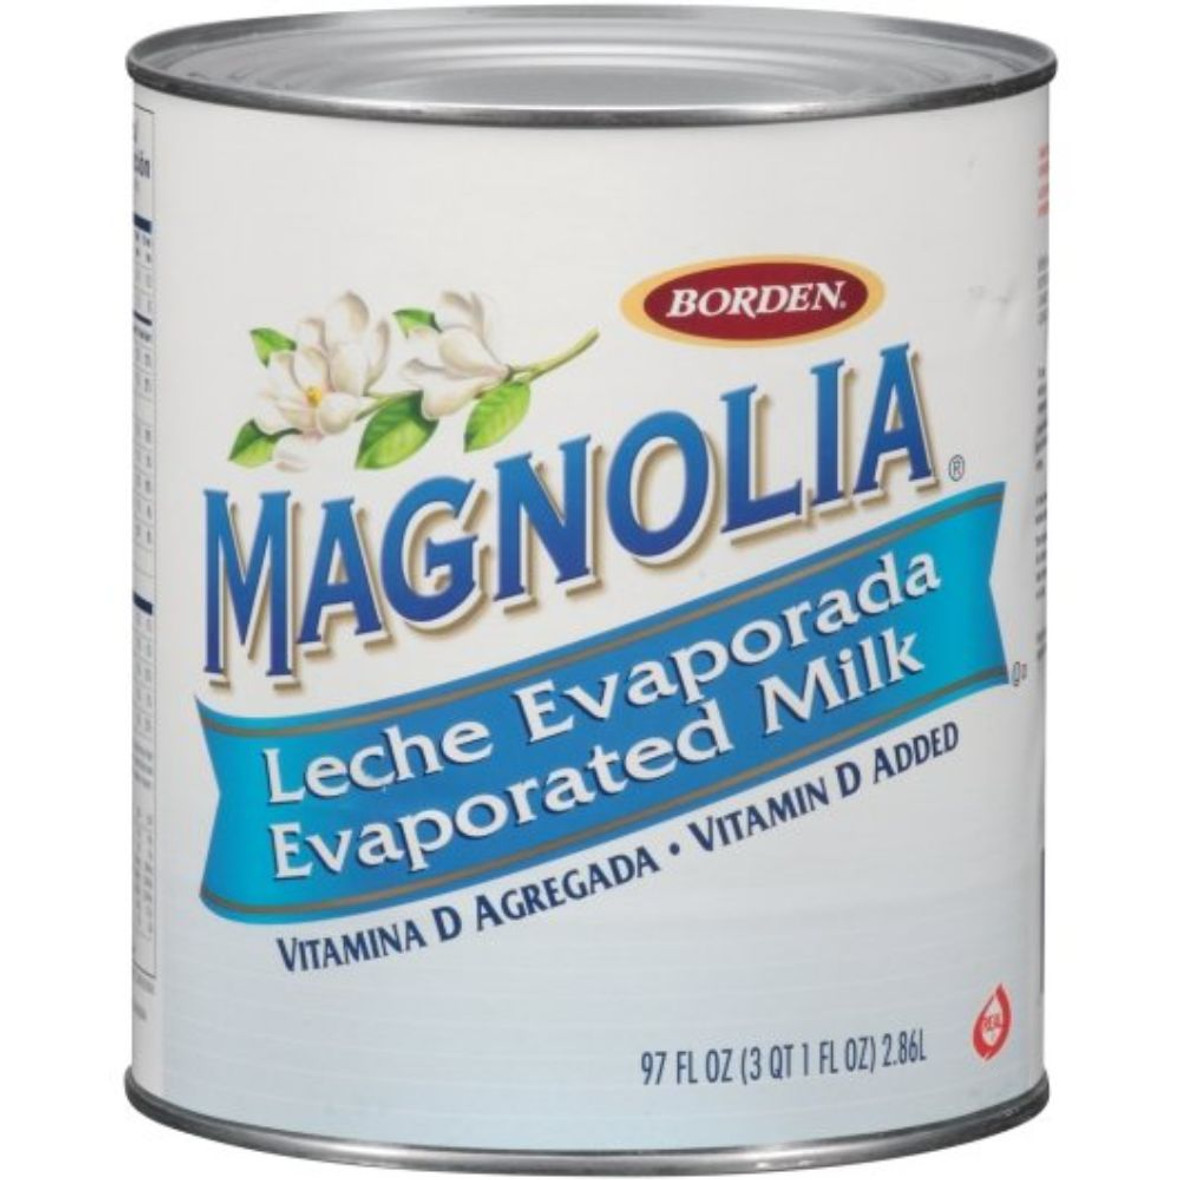 Magnolia Evaporated Milk, 6.71 Pounds